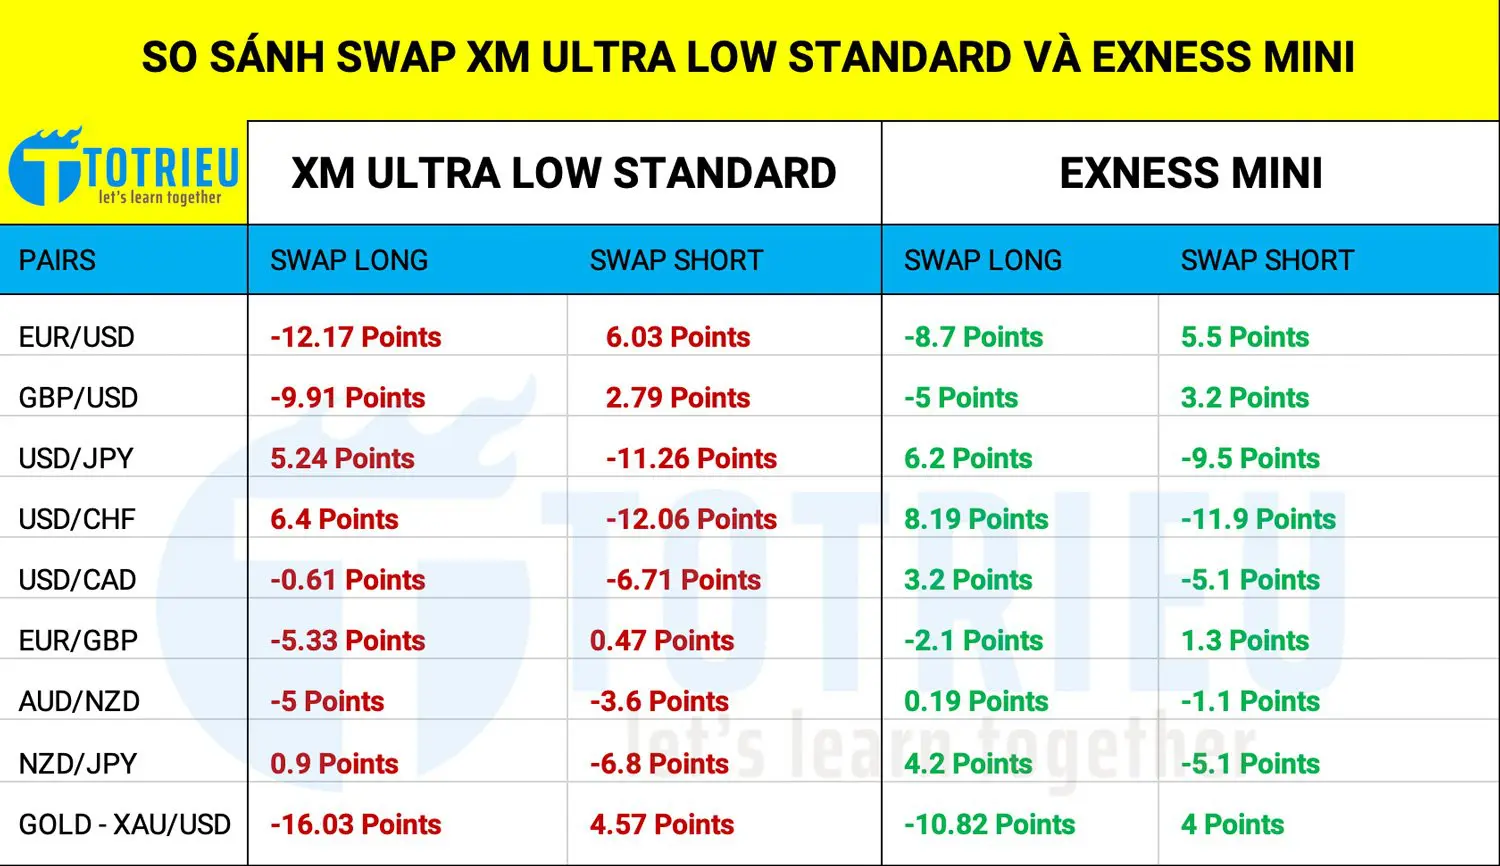 So sánh Swap tài khoản Forex XM Ultra Low Standard và Exness Mini